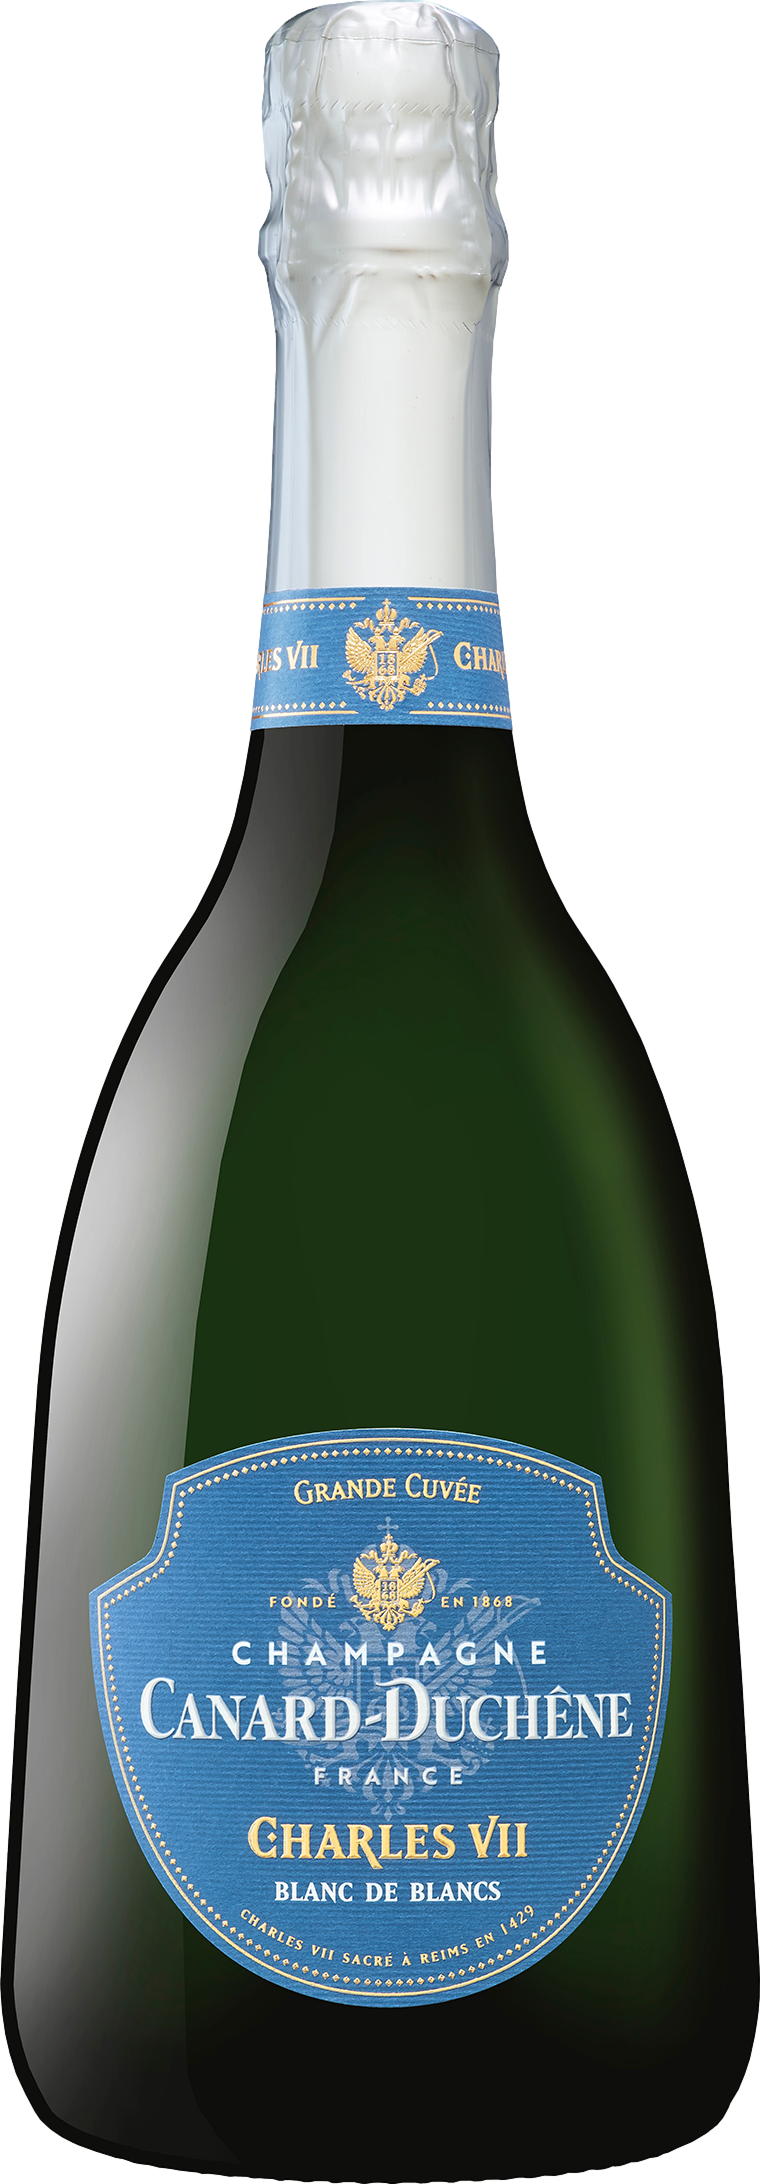 Champagne Canard-Duchene Grande Cuvee  Charles VII Blanc de Blancs